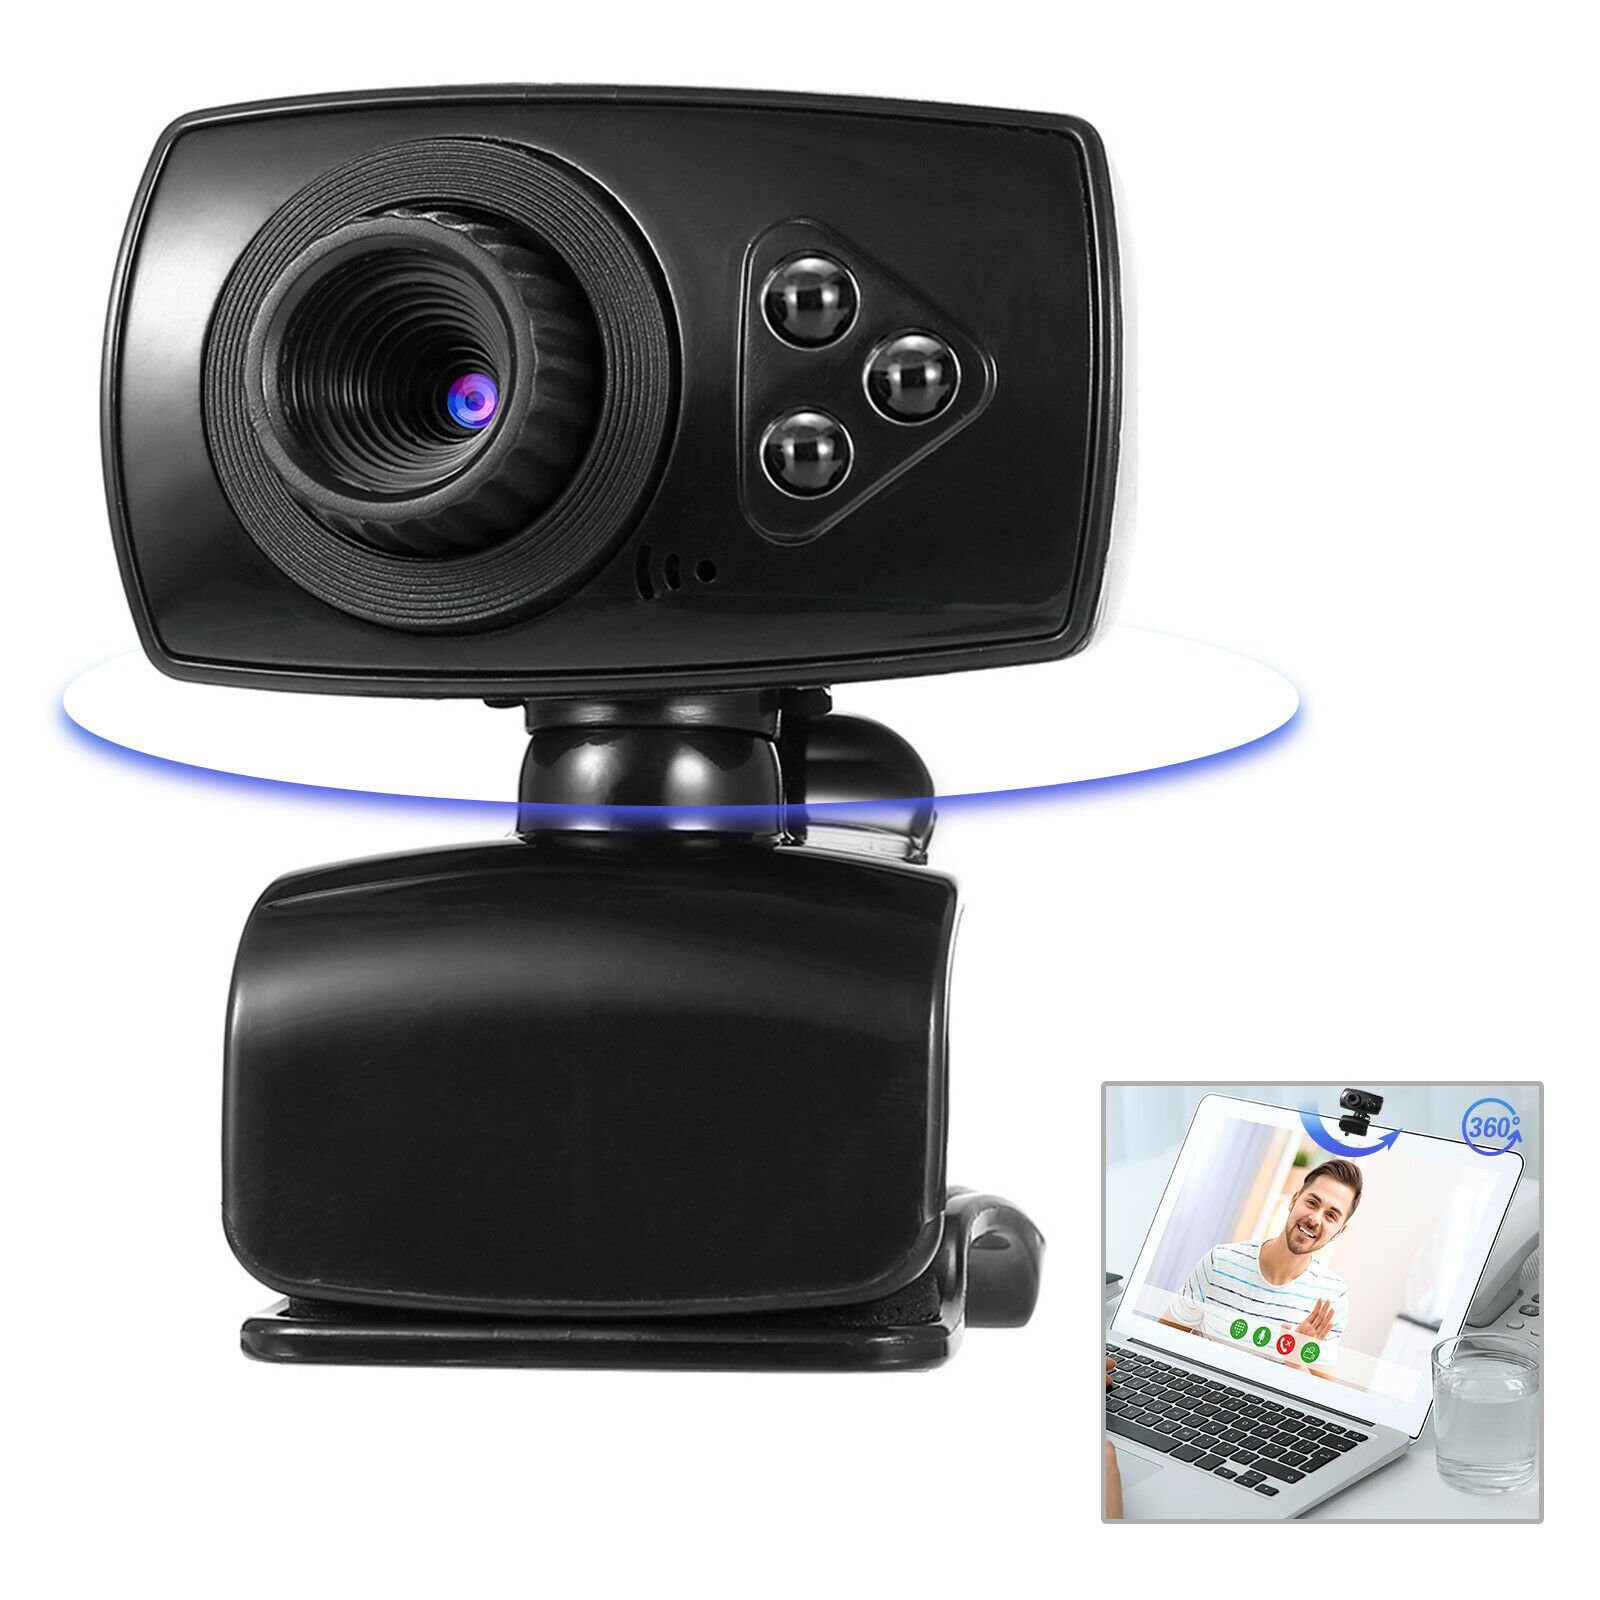 Fangqi »HD Webcam Kamera 480p & 30 fps, Eingebautes Mikrofon, Streaming  Webcam für PC/MAC/Desktop HD-Videoanruf, Plug & Play & drehbare Halterung,  Softwarekompatibilität Windows 2000 / XP / Related / Win8 / Vista